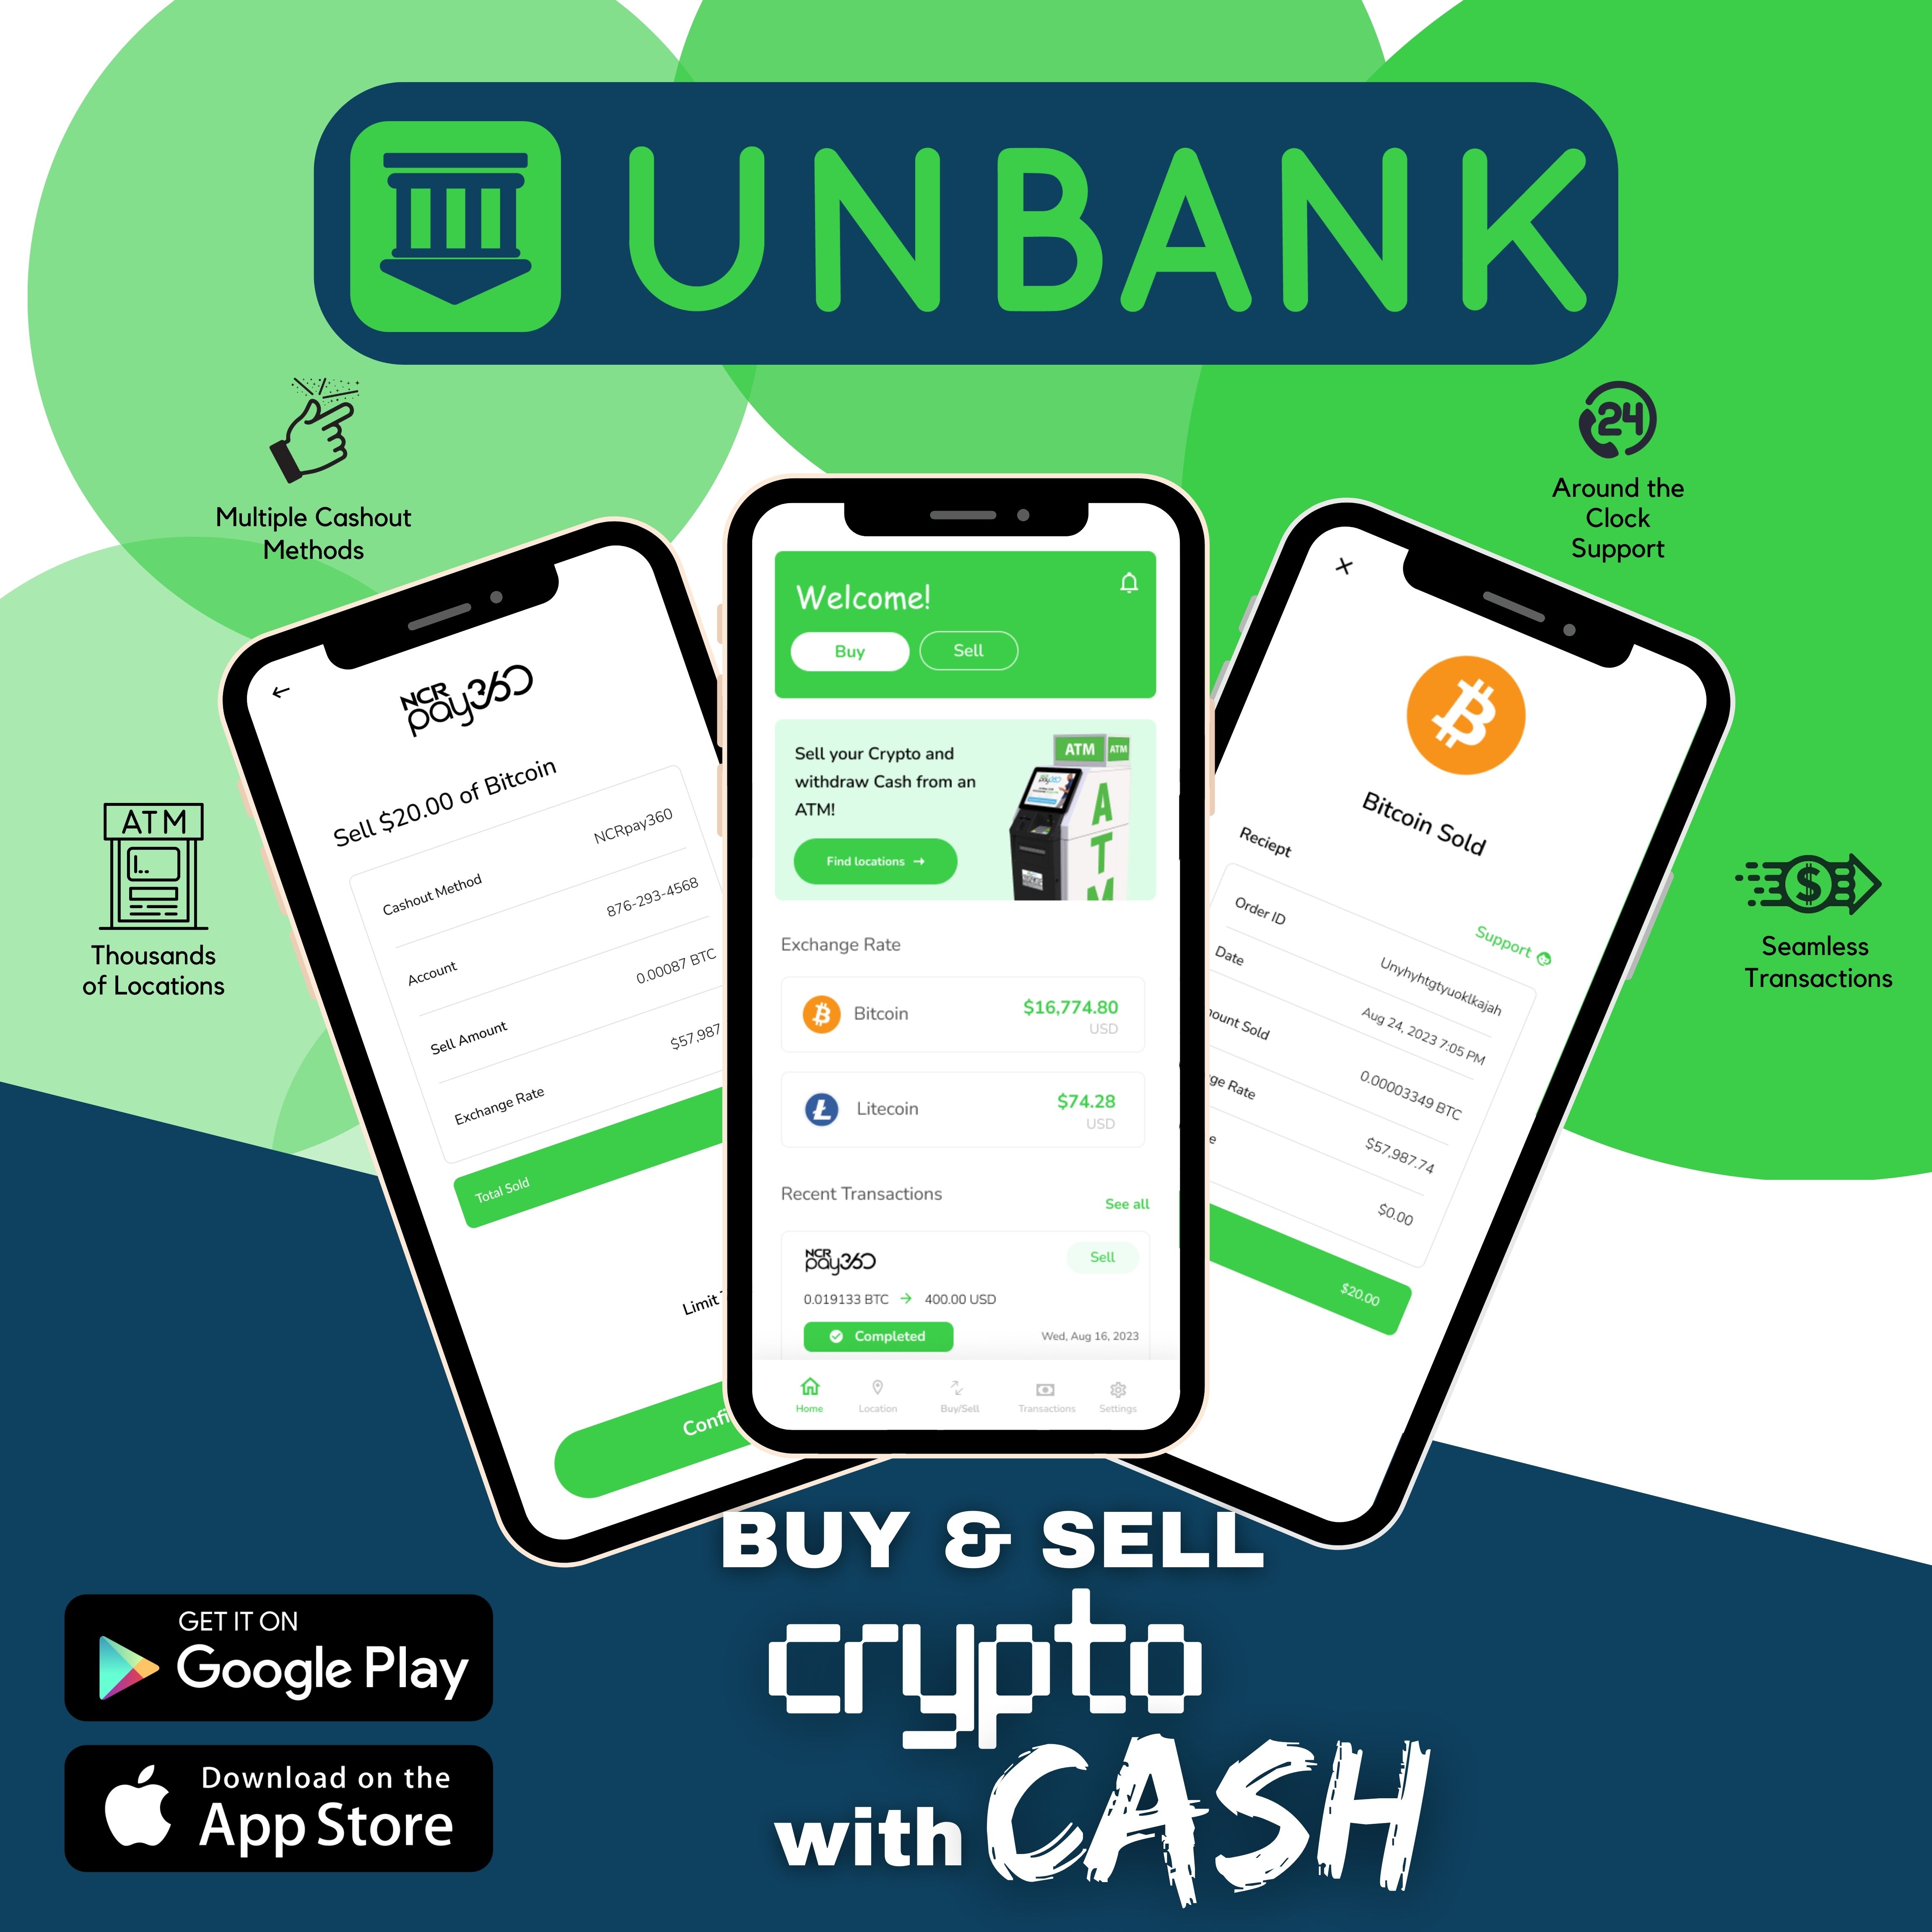 Unbank Mobile App. Download Now! Unbank Bitcoin ATM Louisville (561)396-2359